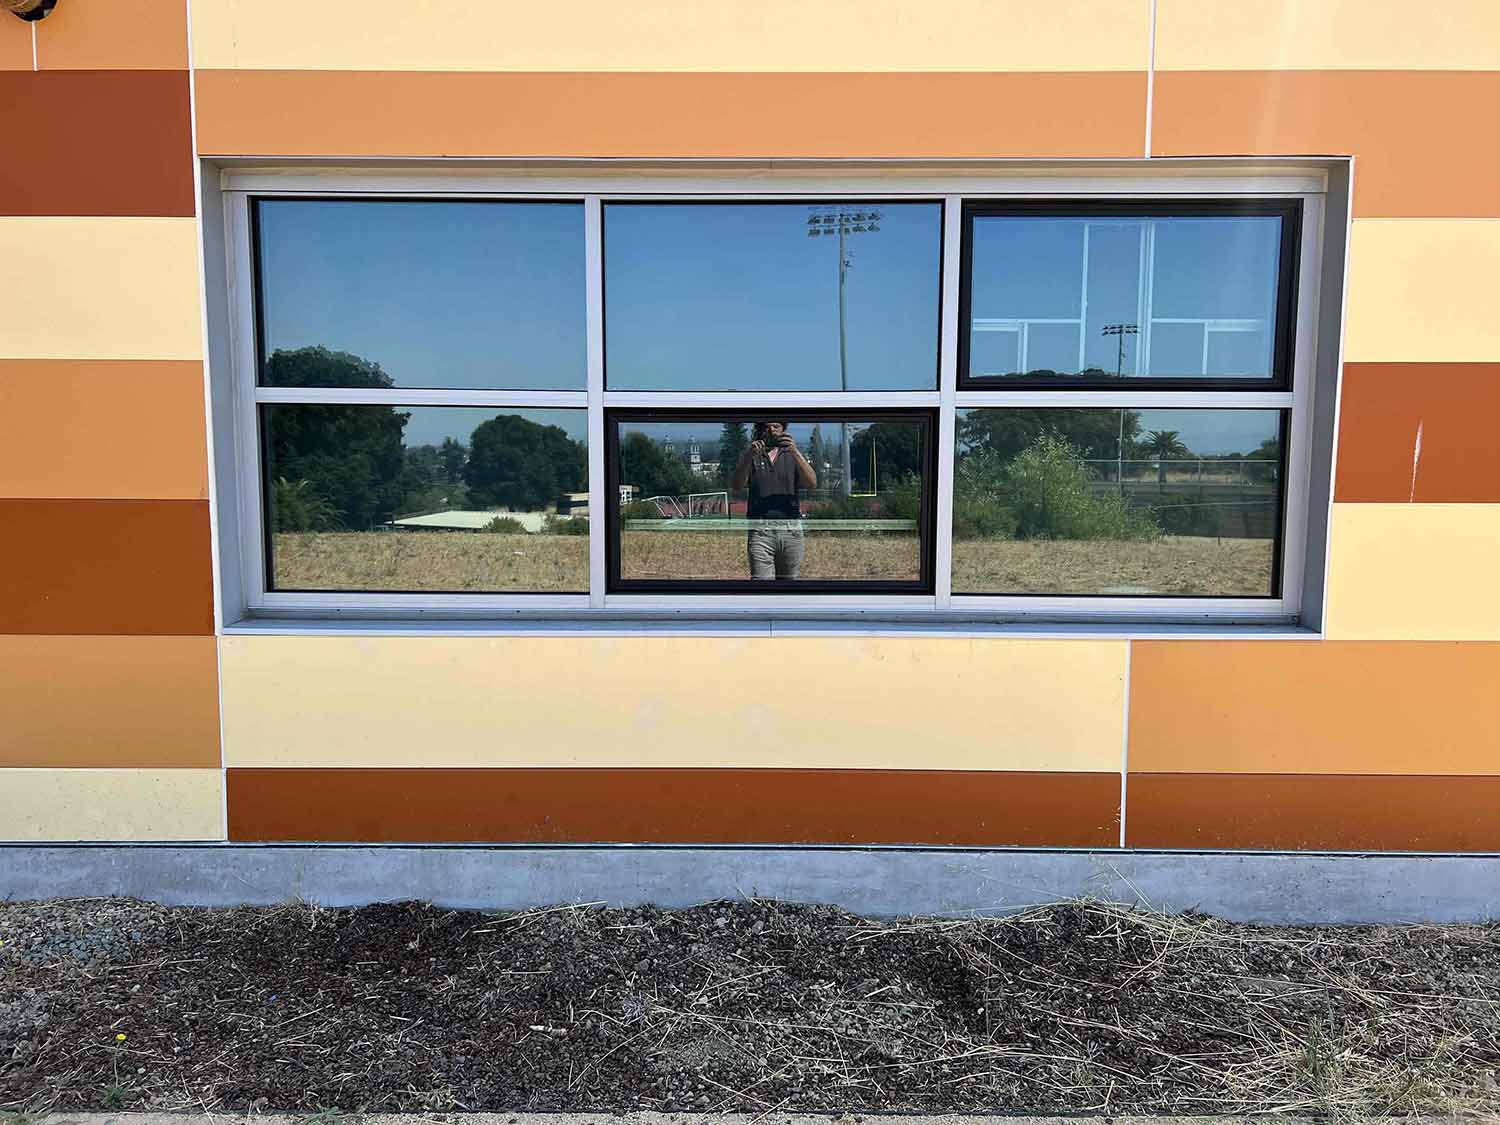 ClimatePro installed 3M Anti-Graffiti window film on the windows of this Hayward, CA school. Get a free estimate today.